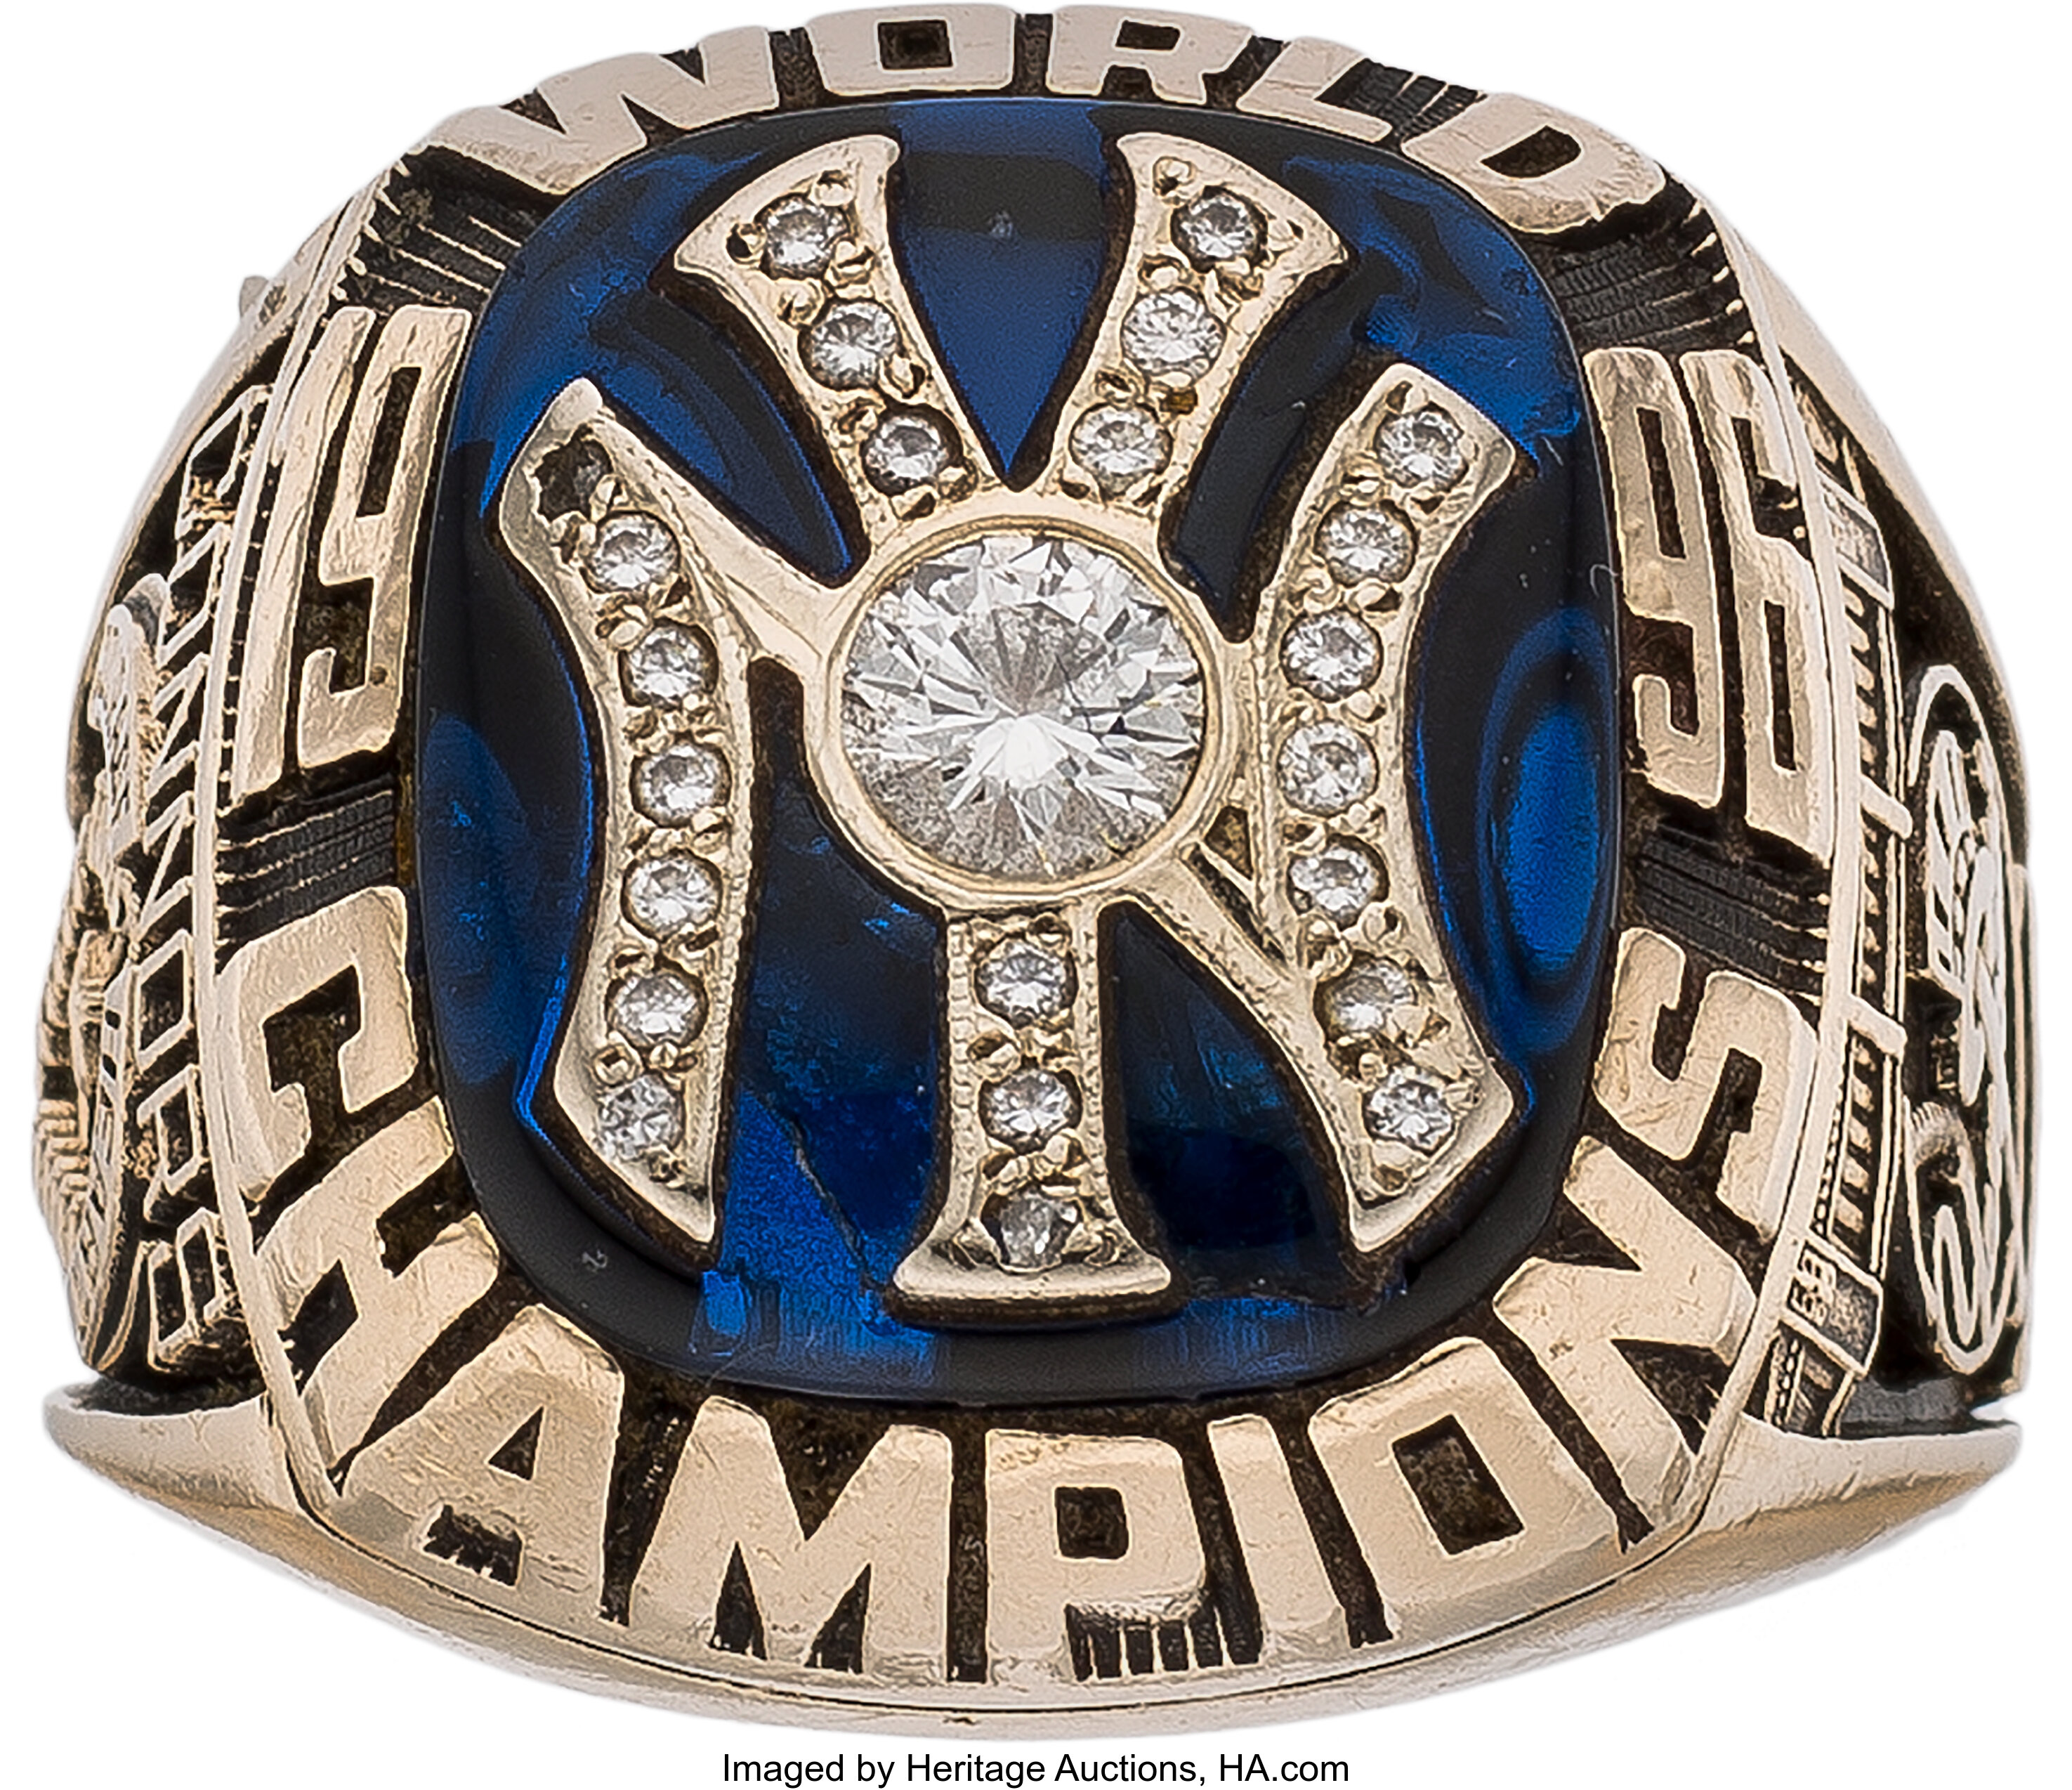 1996 New York Yankees World Series Championship Ring. Baseball